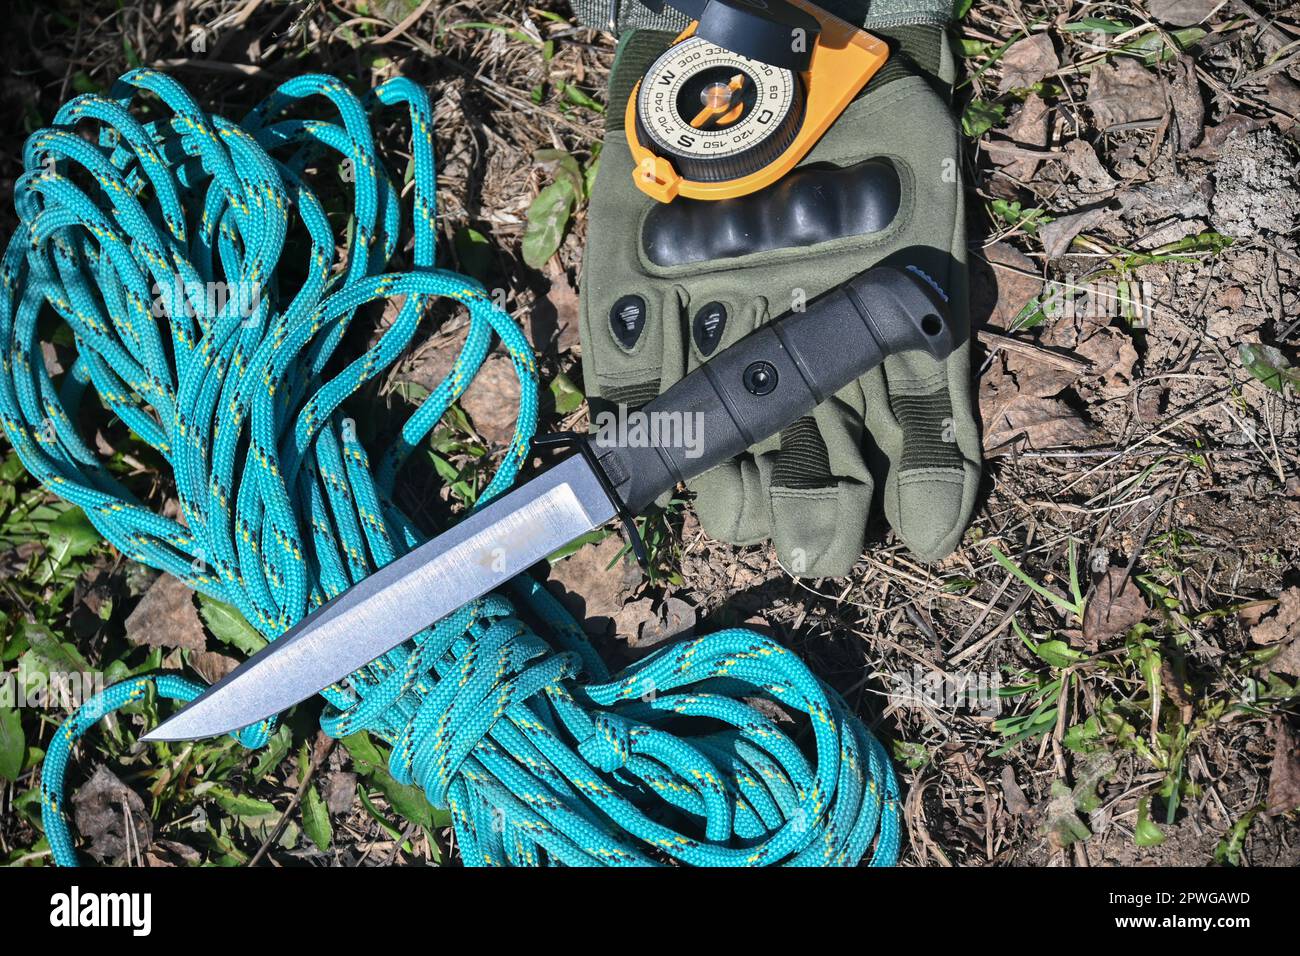 Survival Kit Army And Bushcraft Kit With Tin Mug Mug Candle Knife Paracord  Stock Photo - Download Image Now - iStock